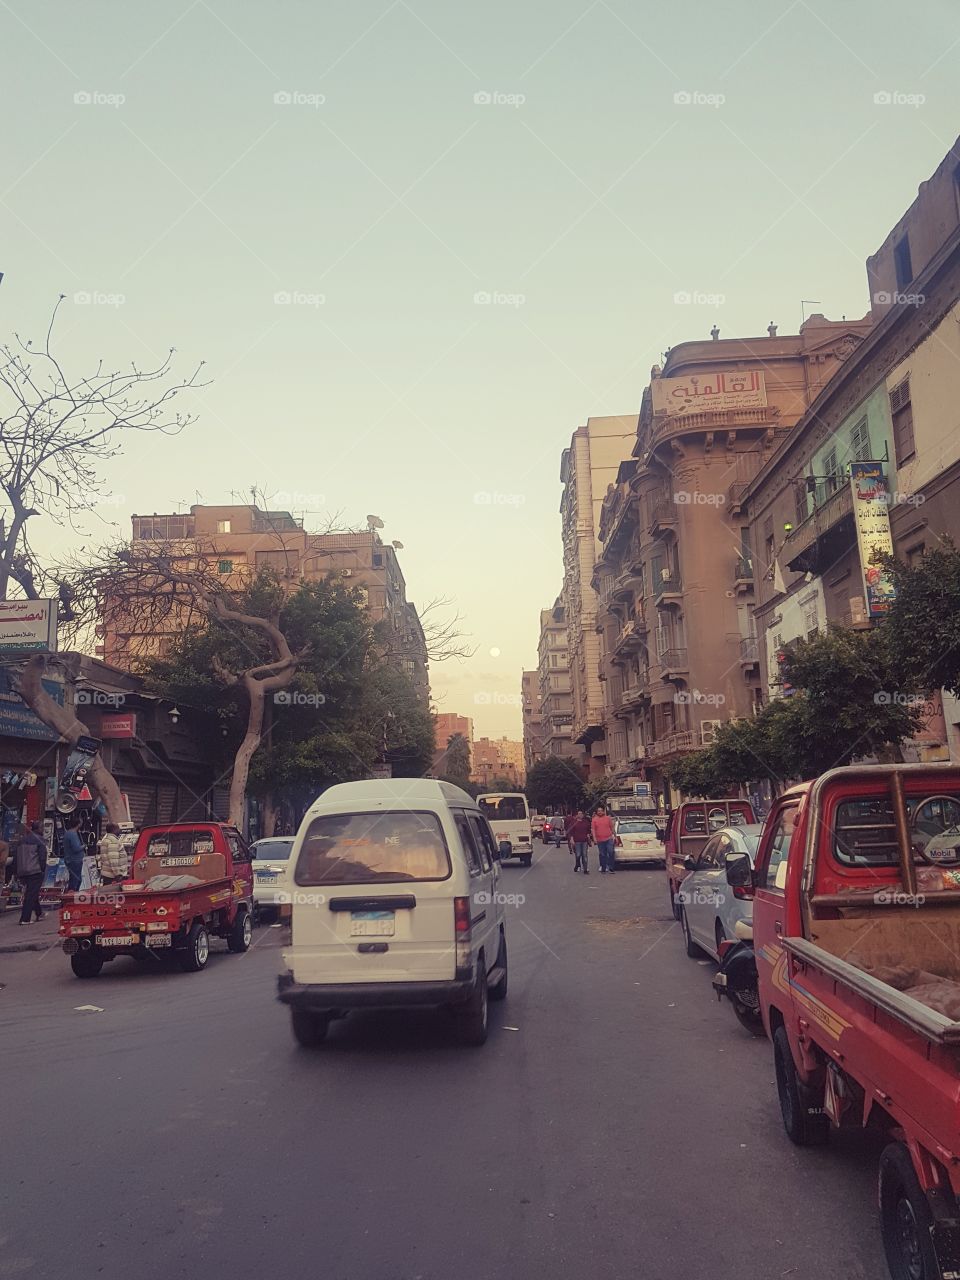 street - Cars - Stores - Egypt